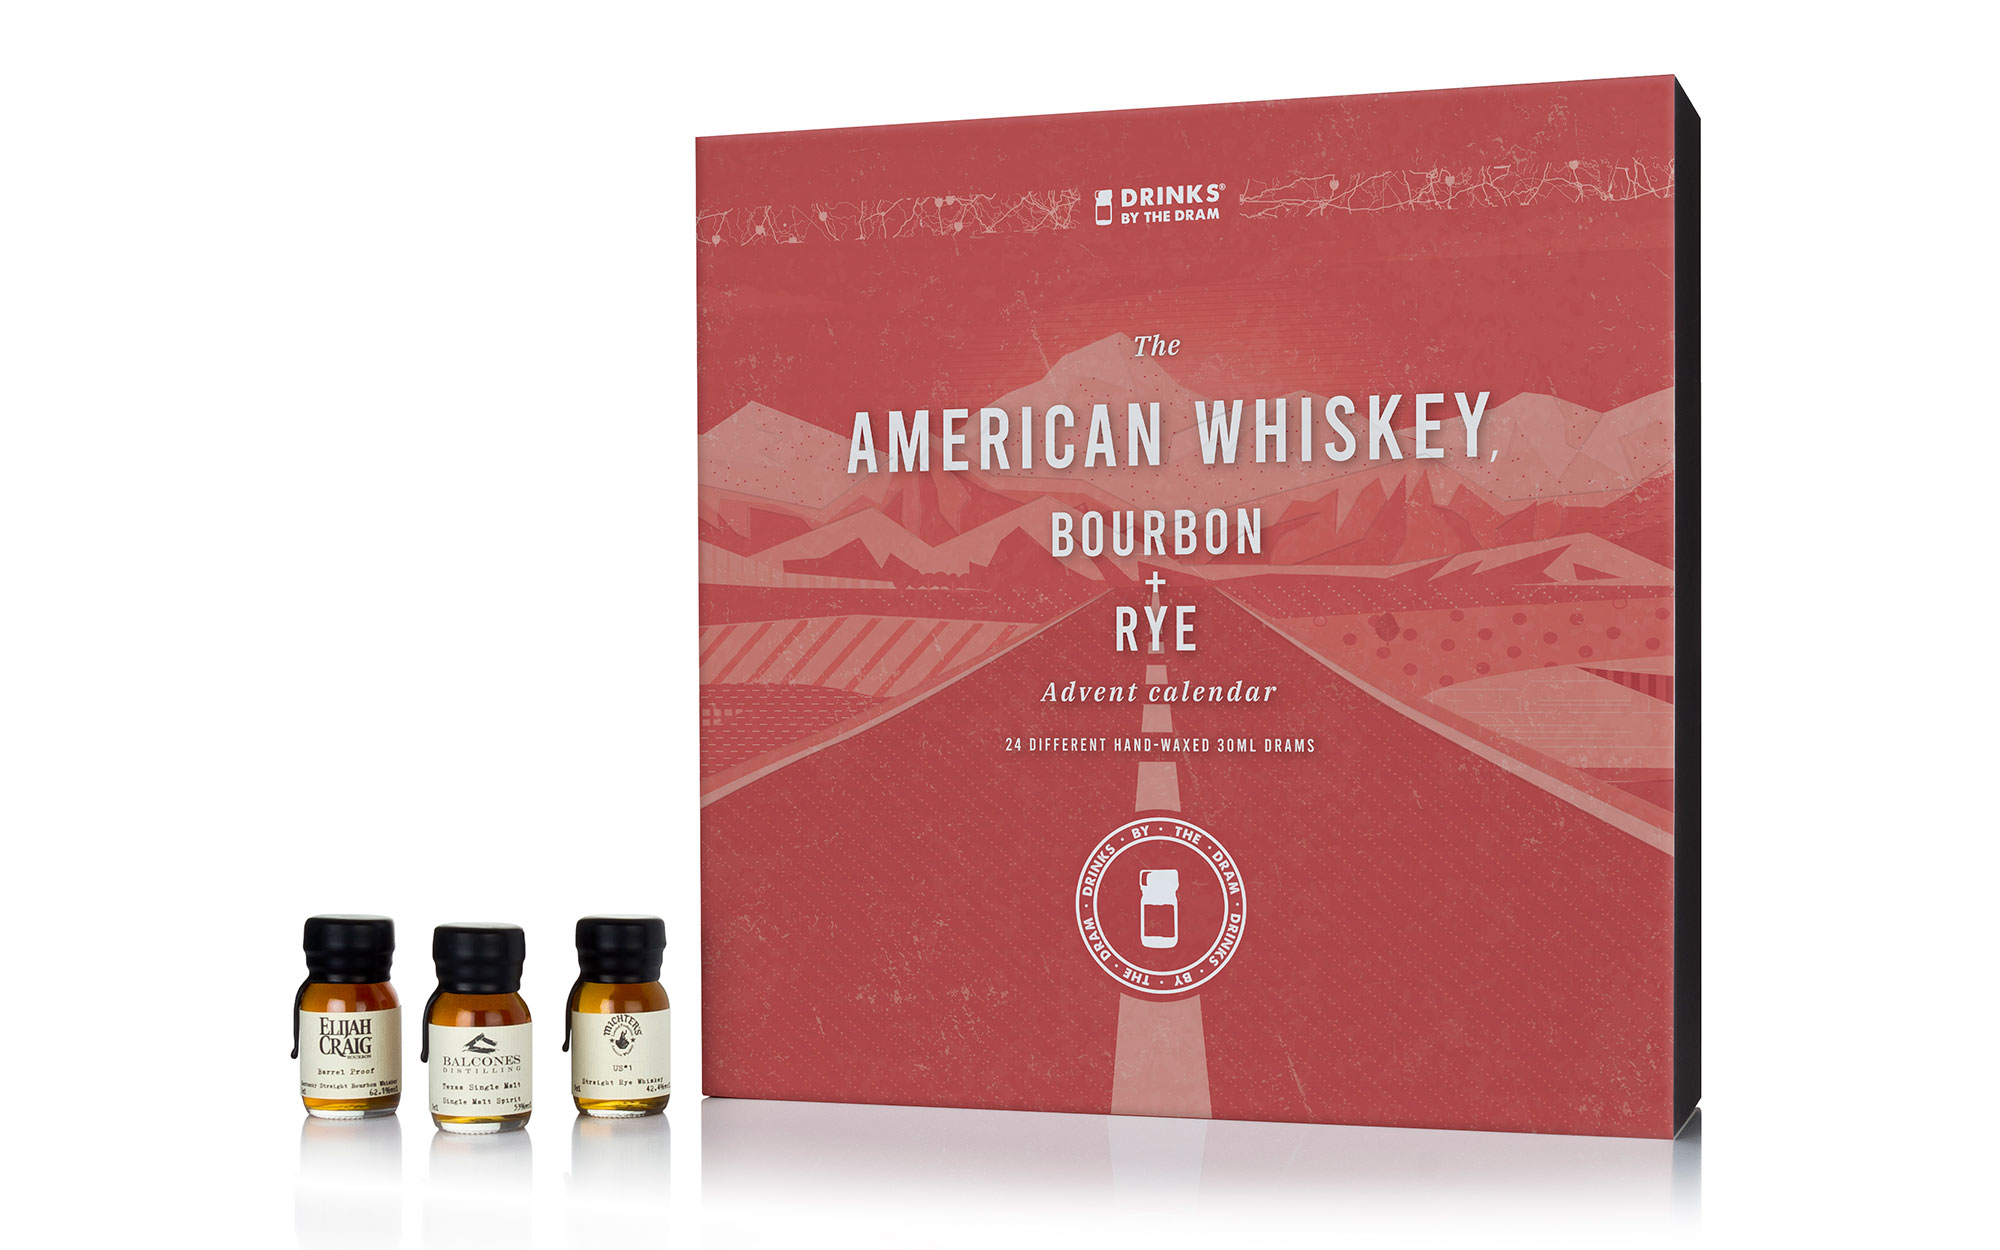 The American Whiskey, Bourbon & Rye Advent Calendar